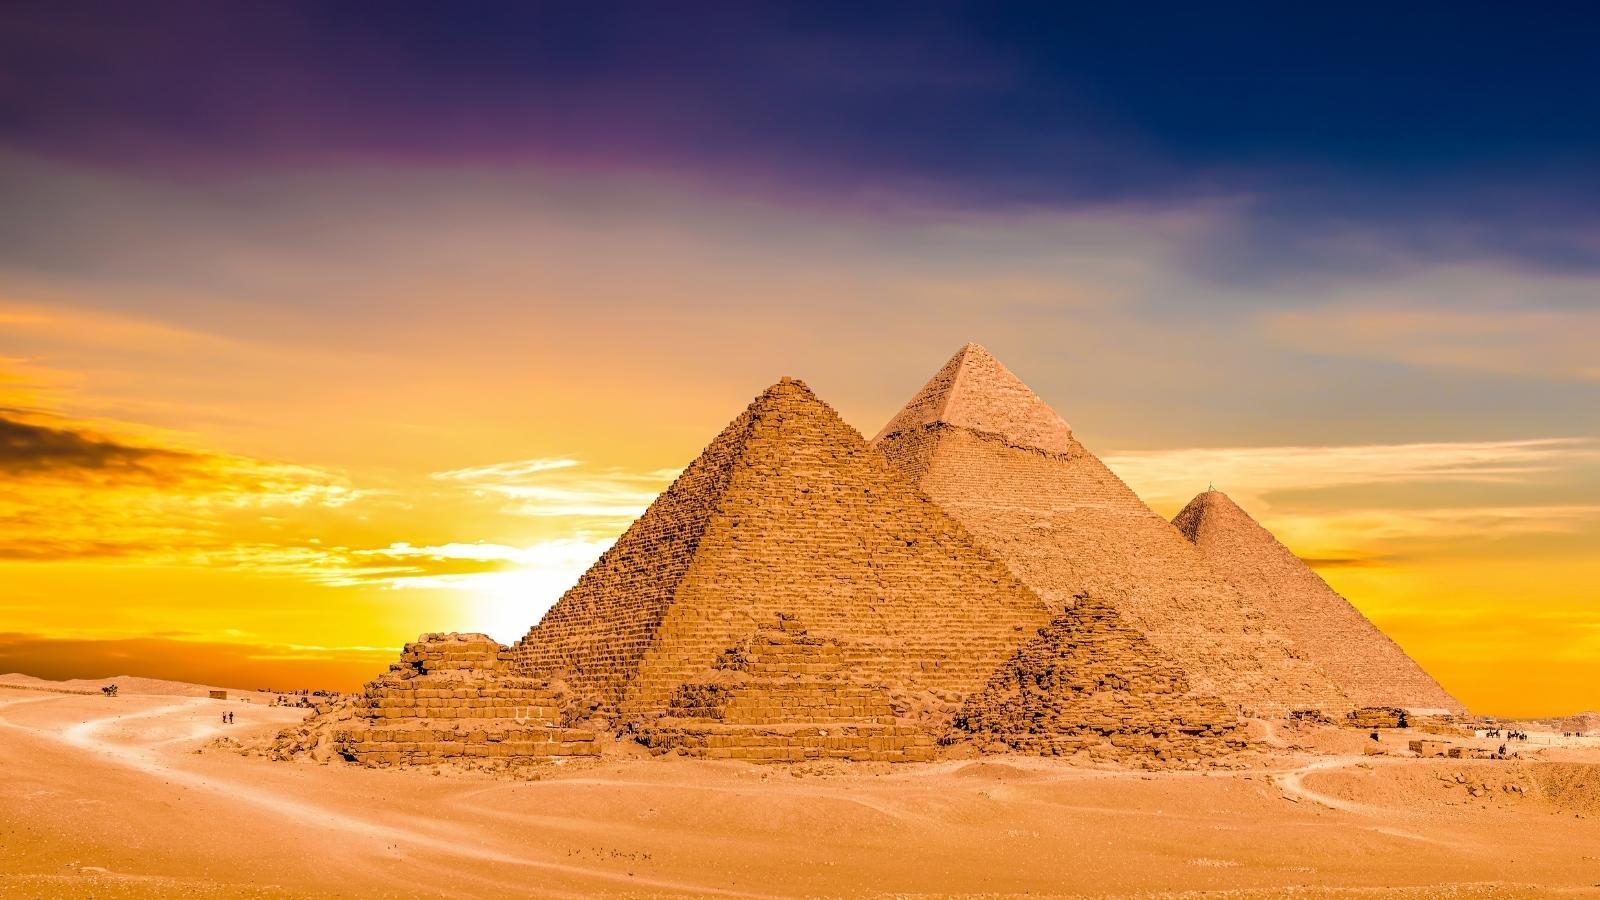 The pyramid - Understanding your dreams - Kaya